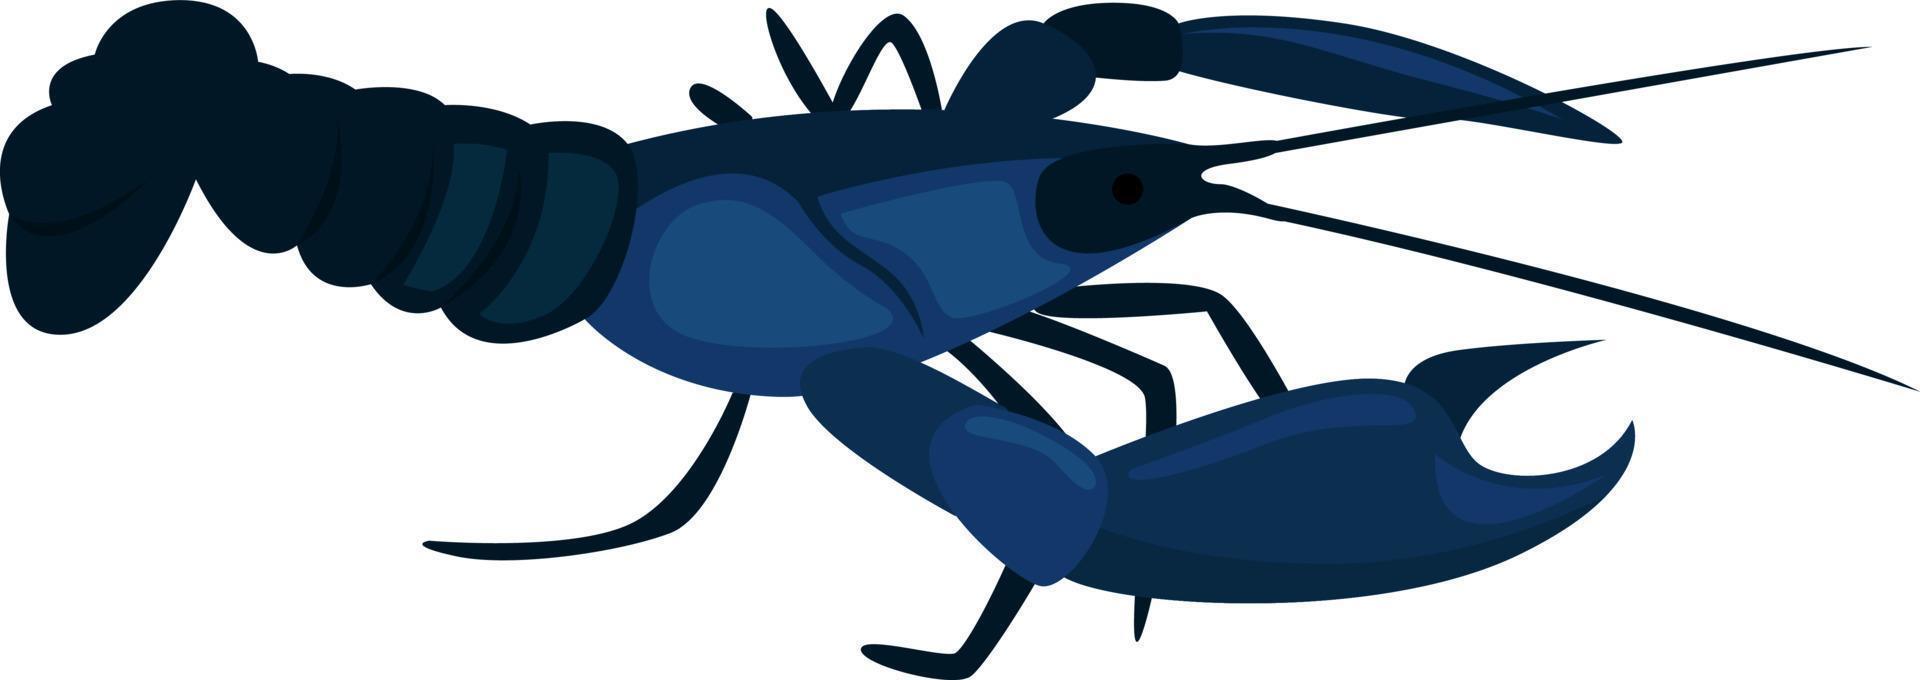 Blue crayfish, illustration, vector on white background